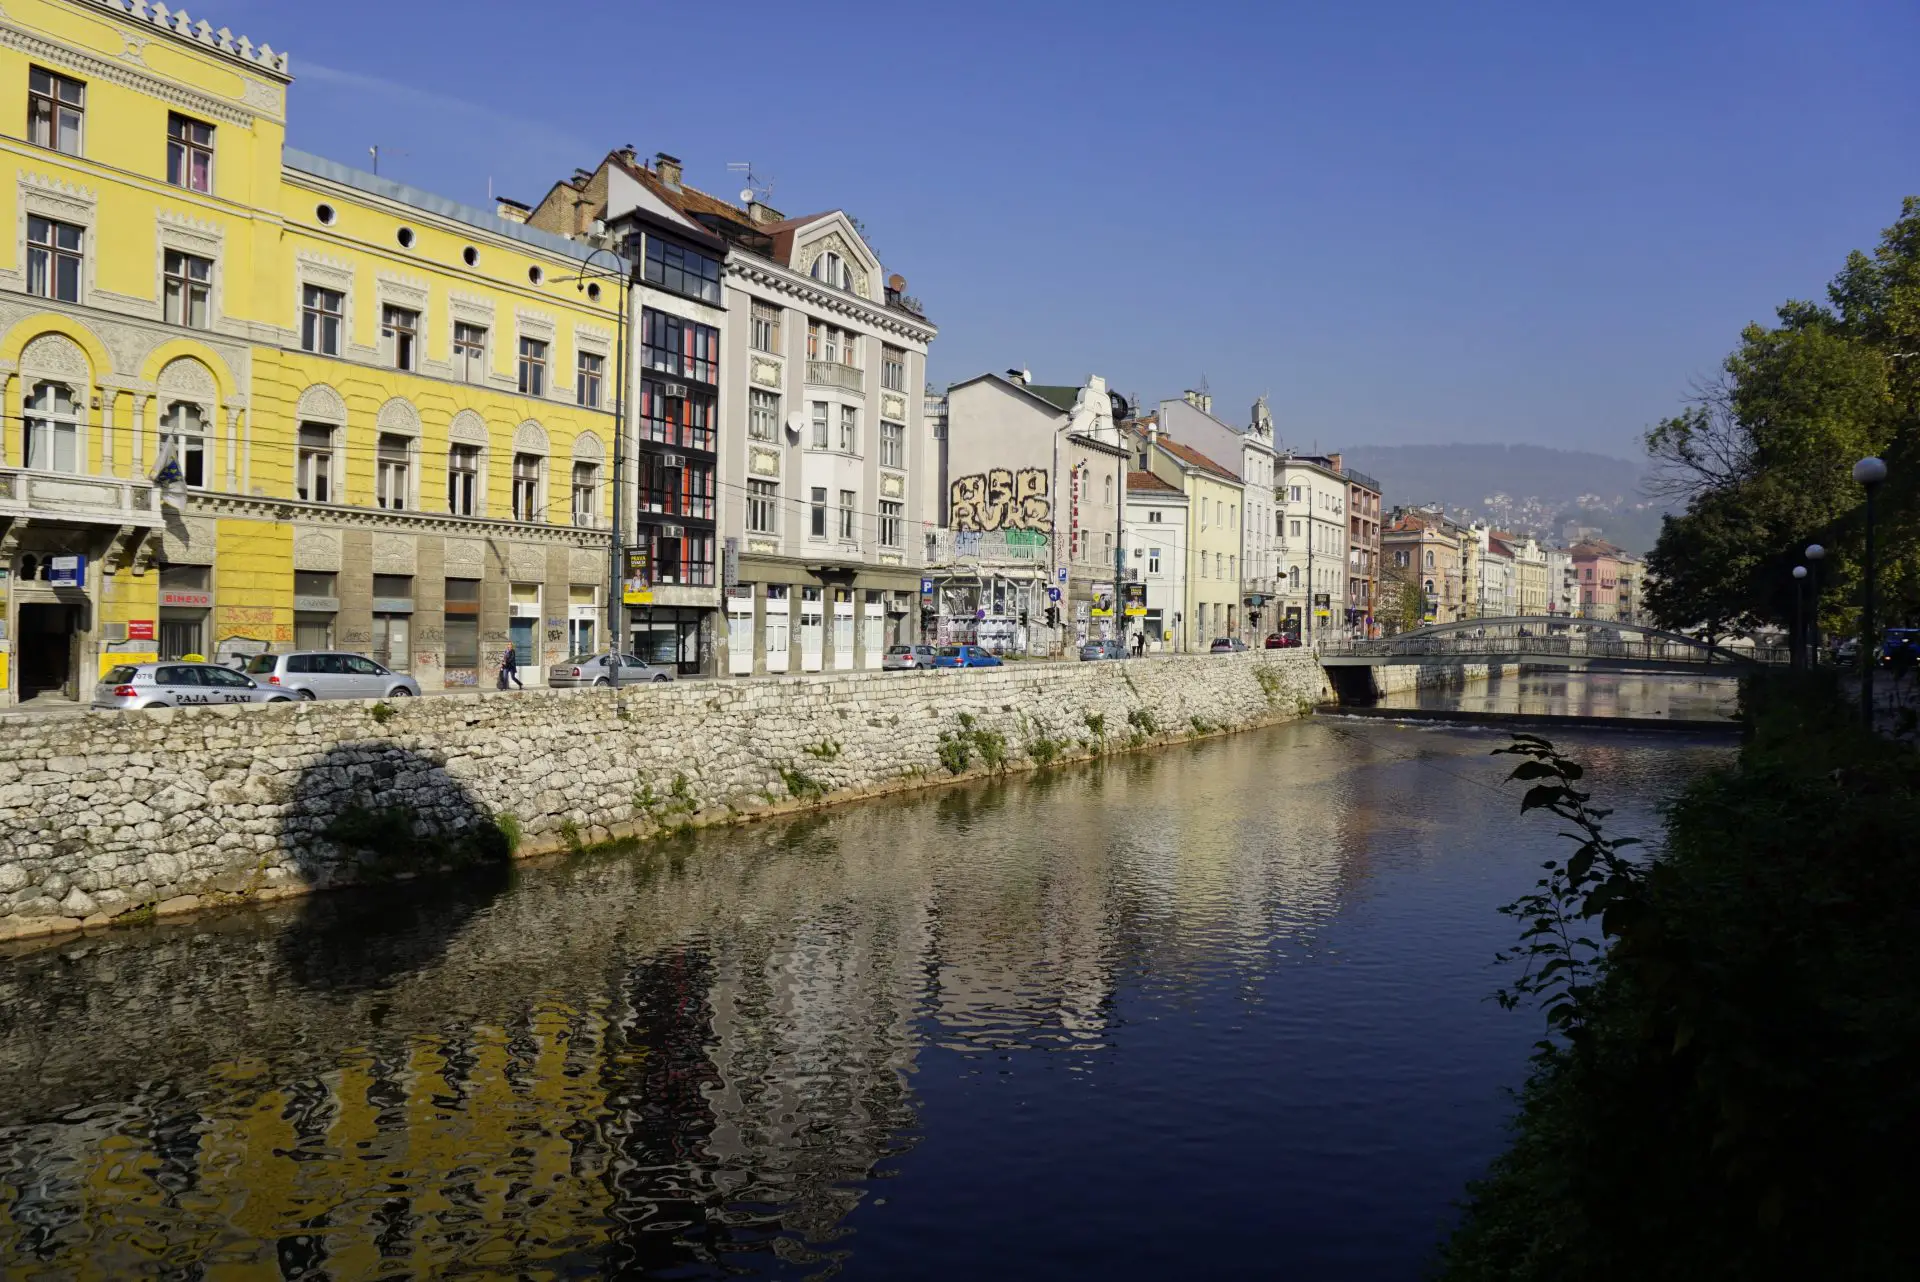 Miljacka river, Sarajevo, Bosnia and Herzegovina - Experiencing the Globe